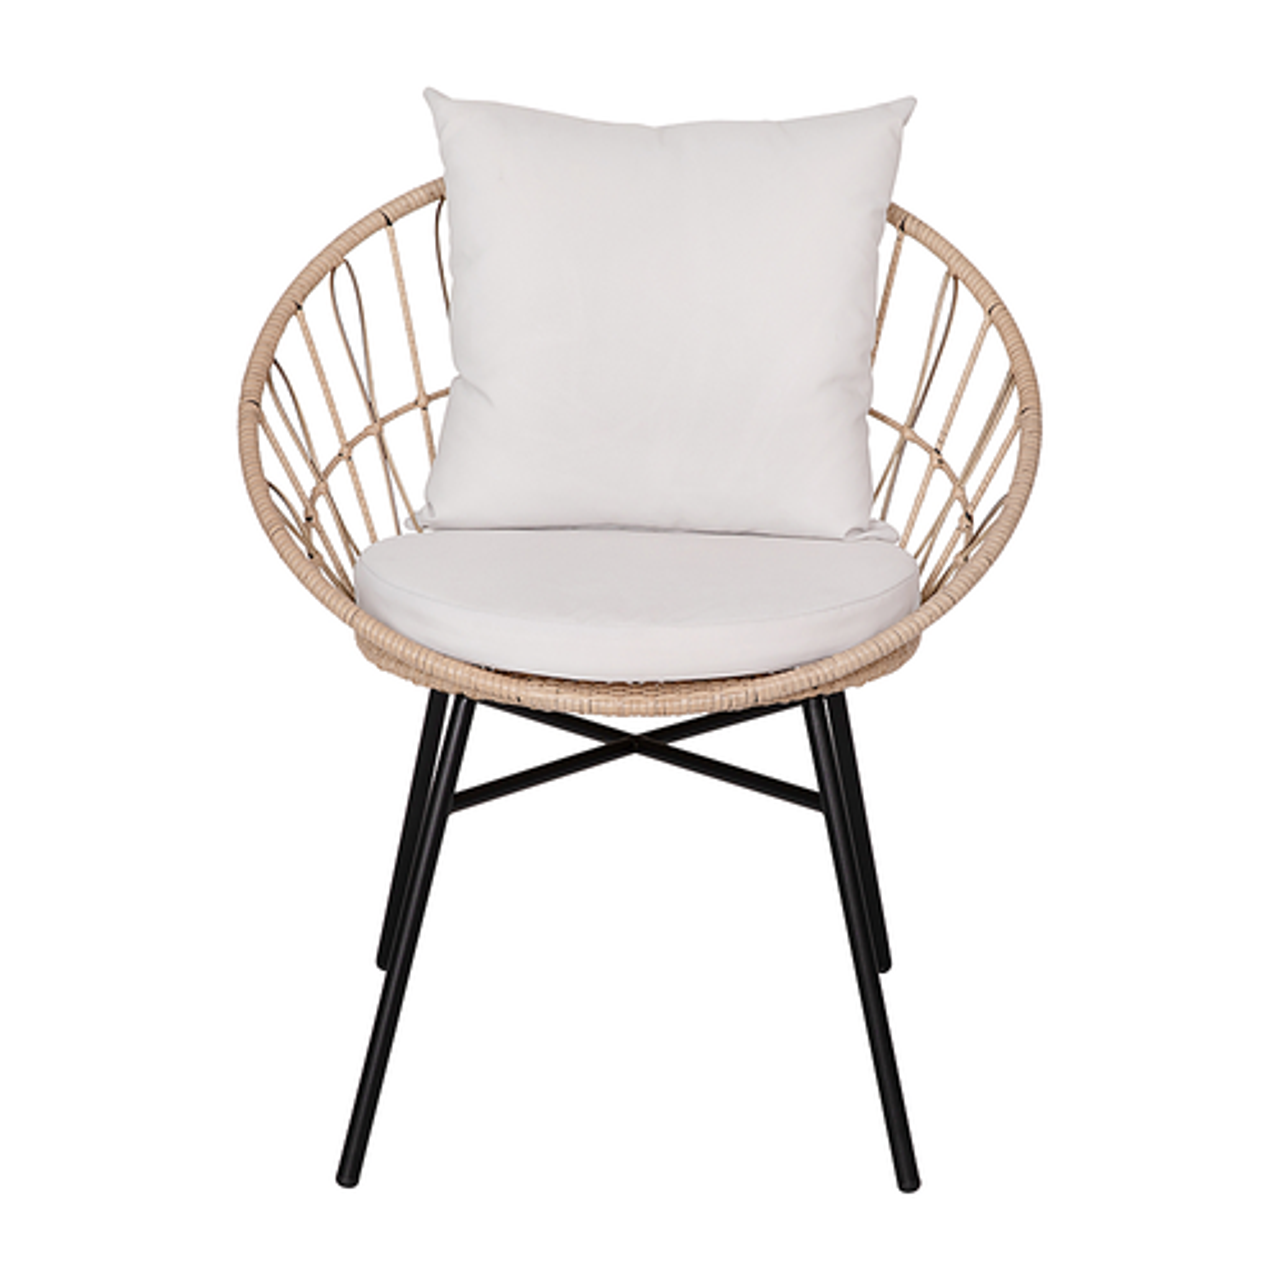 Flash Furniture - Devon Patio Lounge Chair - Tan/Light Gray